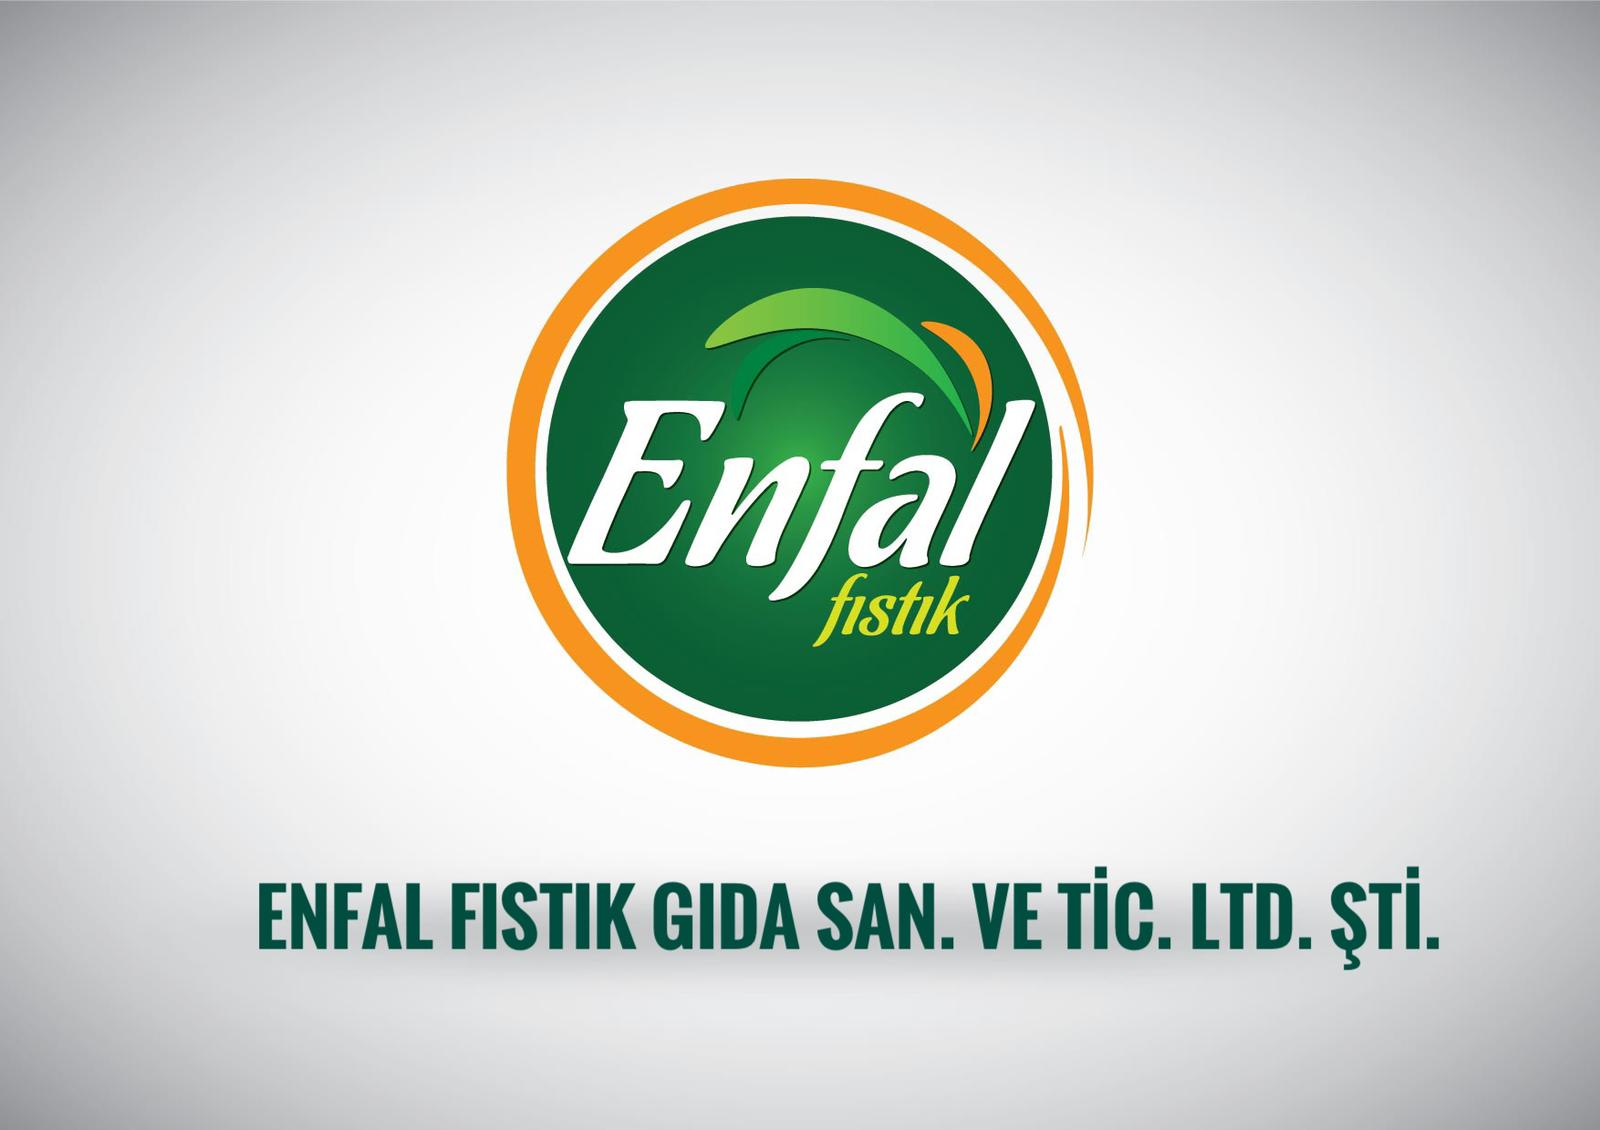 ENFAL FISTIK GIDA LTD. ŞTI.